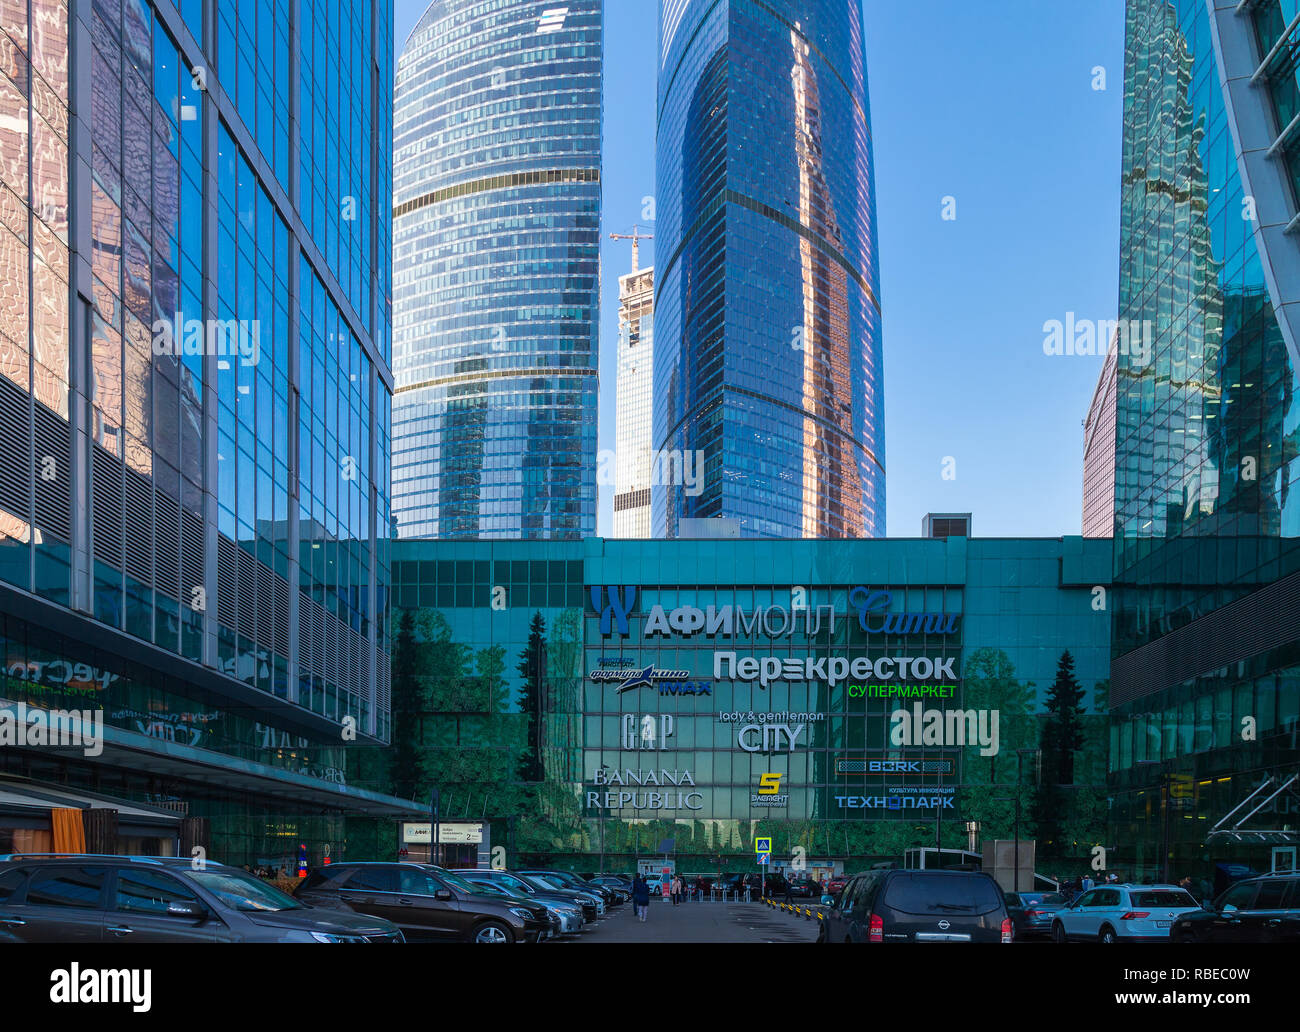 Moskau, Russland - 17. Oktober 2018: Einkaufszentrum "Afimall Stadt" in Moskau - Stadt (Moskau International Business Center). Stockfoto